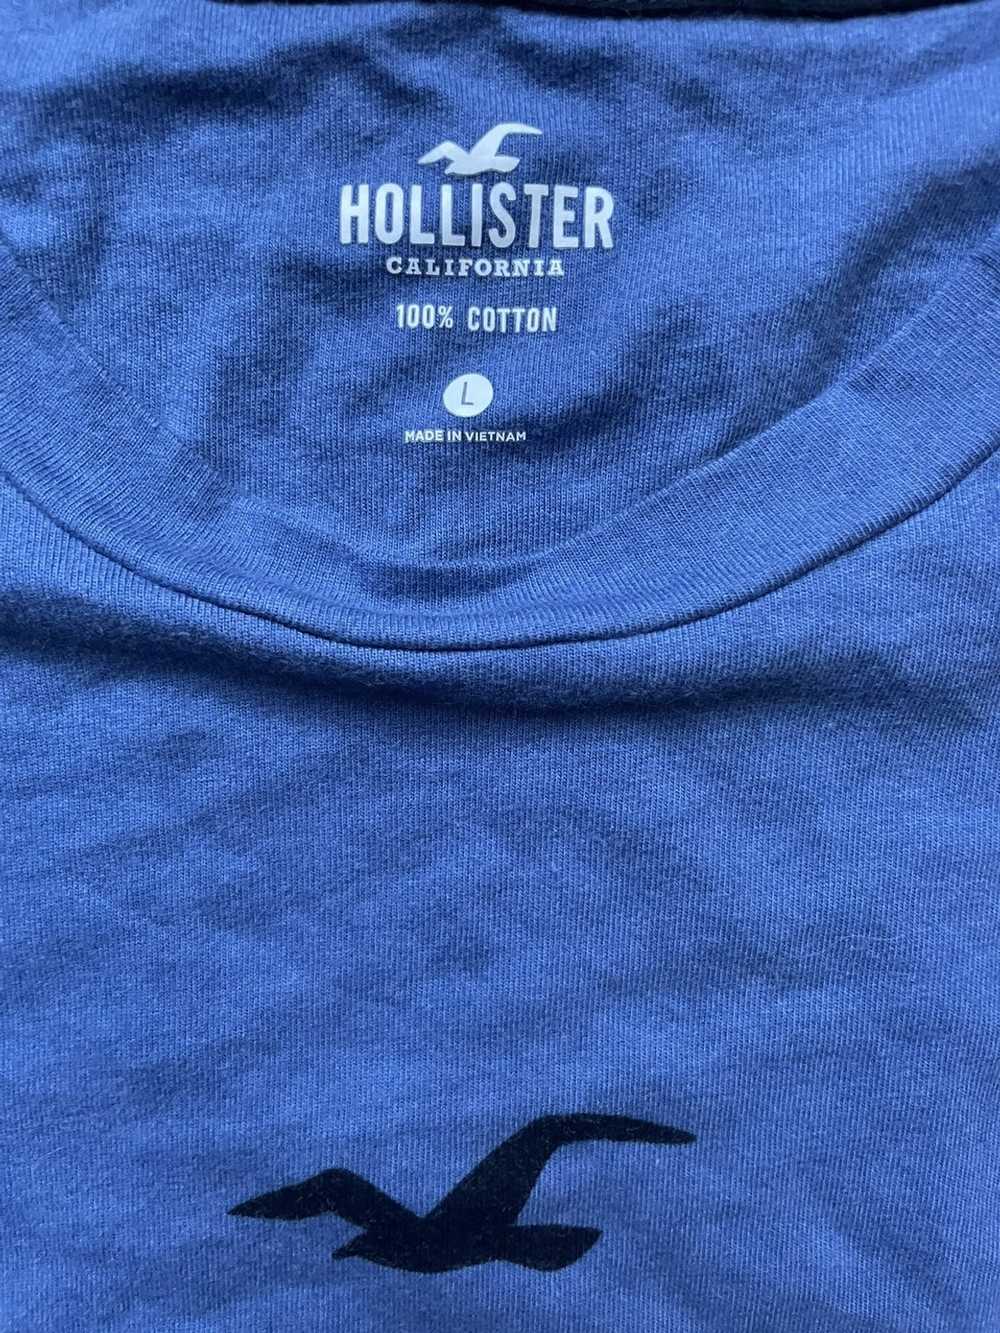 Hollister hollister california Long Sleeve - image 4